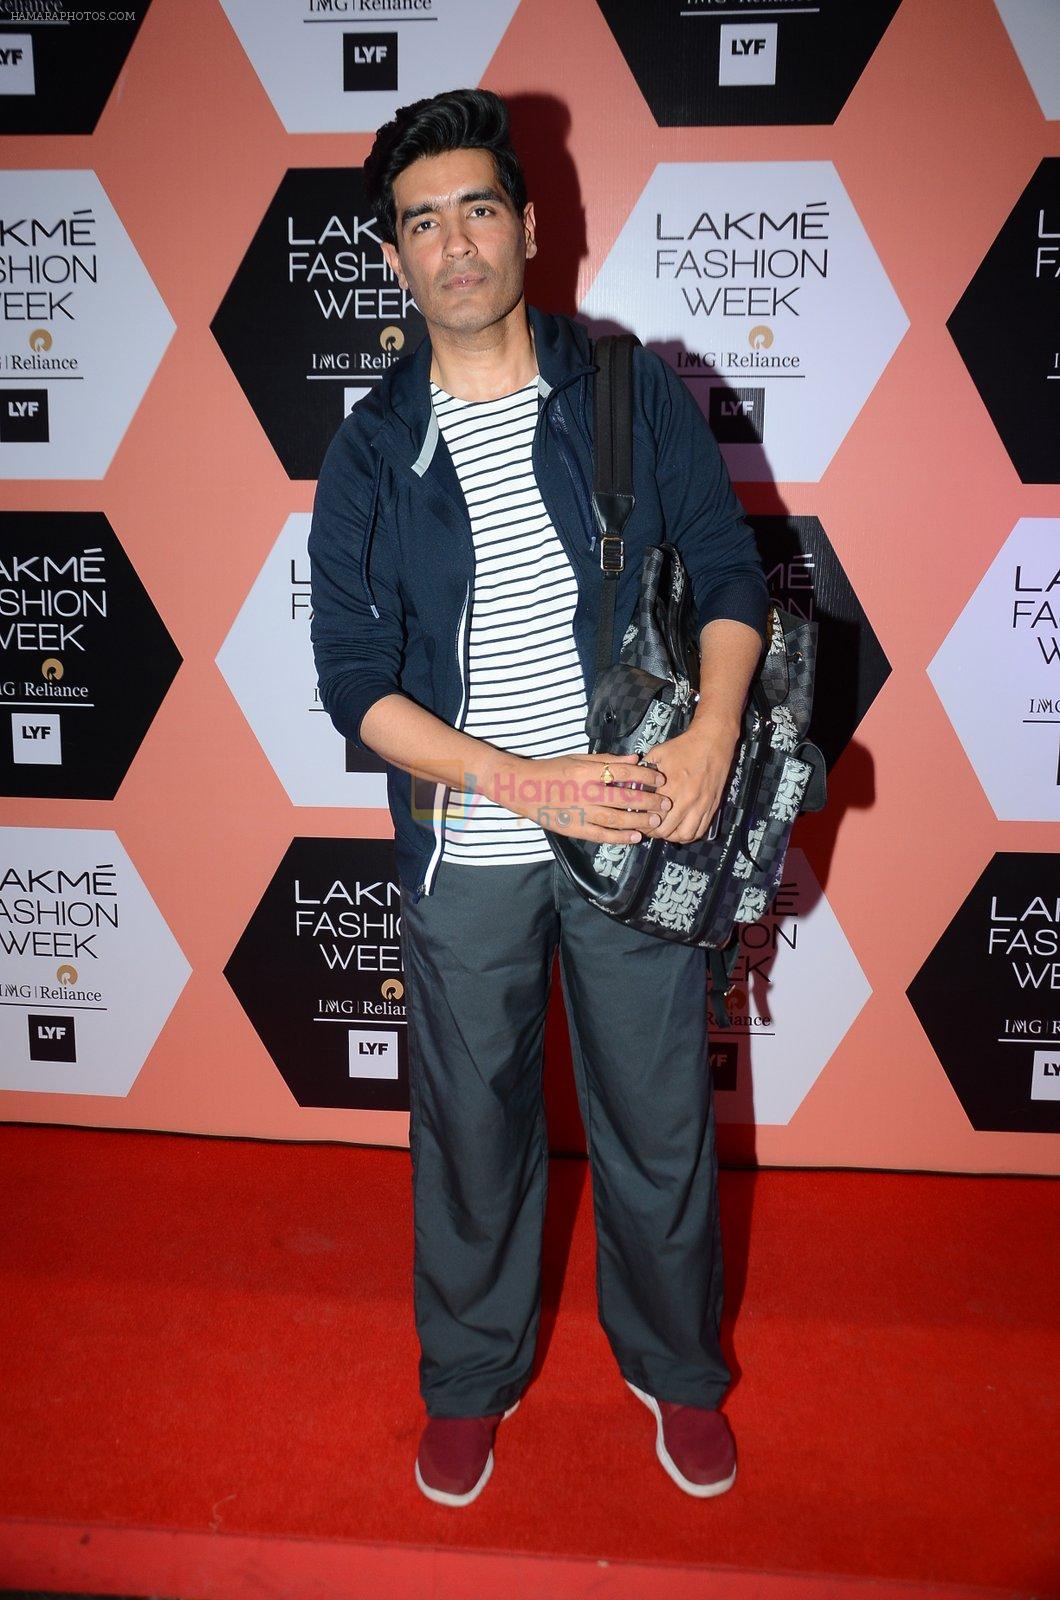 Manish Malhotra on Day 4 at Lakme Fashion Week 2016 on 2nd April 2016